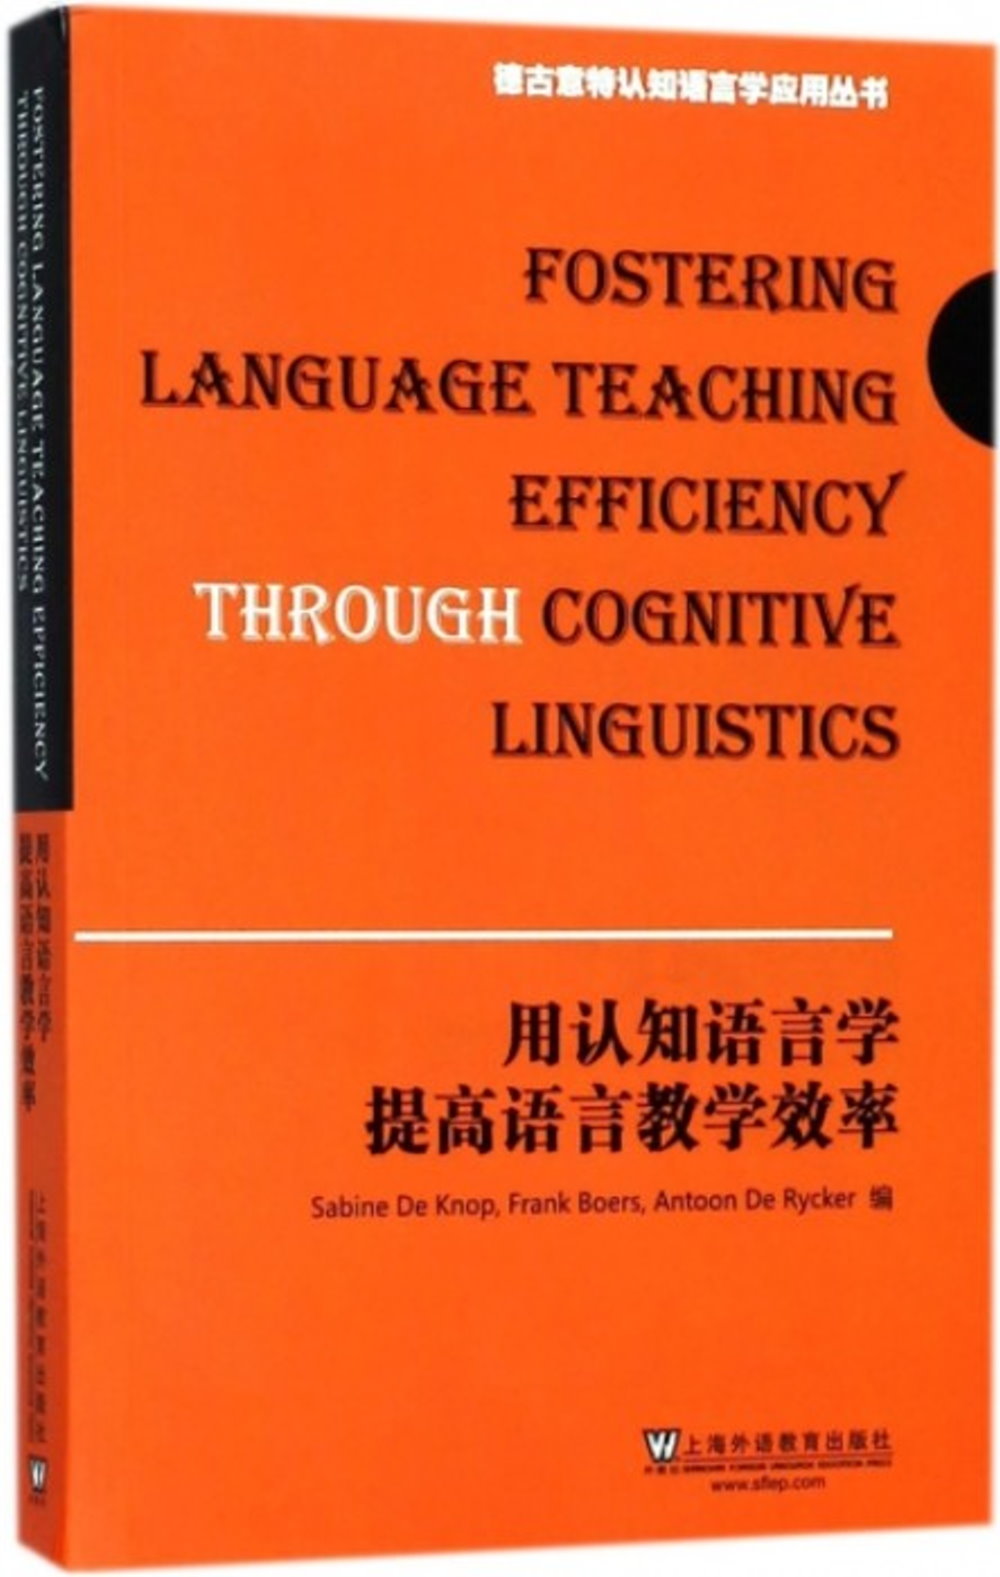 用認知語言學提高語言教學效率＝Fostering language teaching efficiency through cognitive linguistics